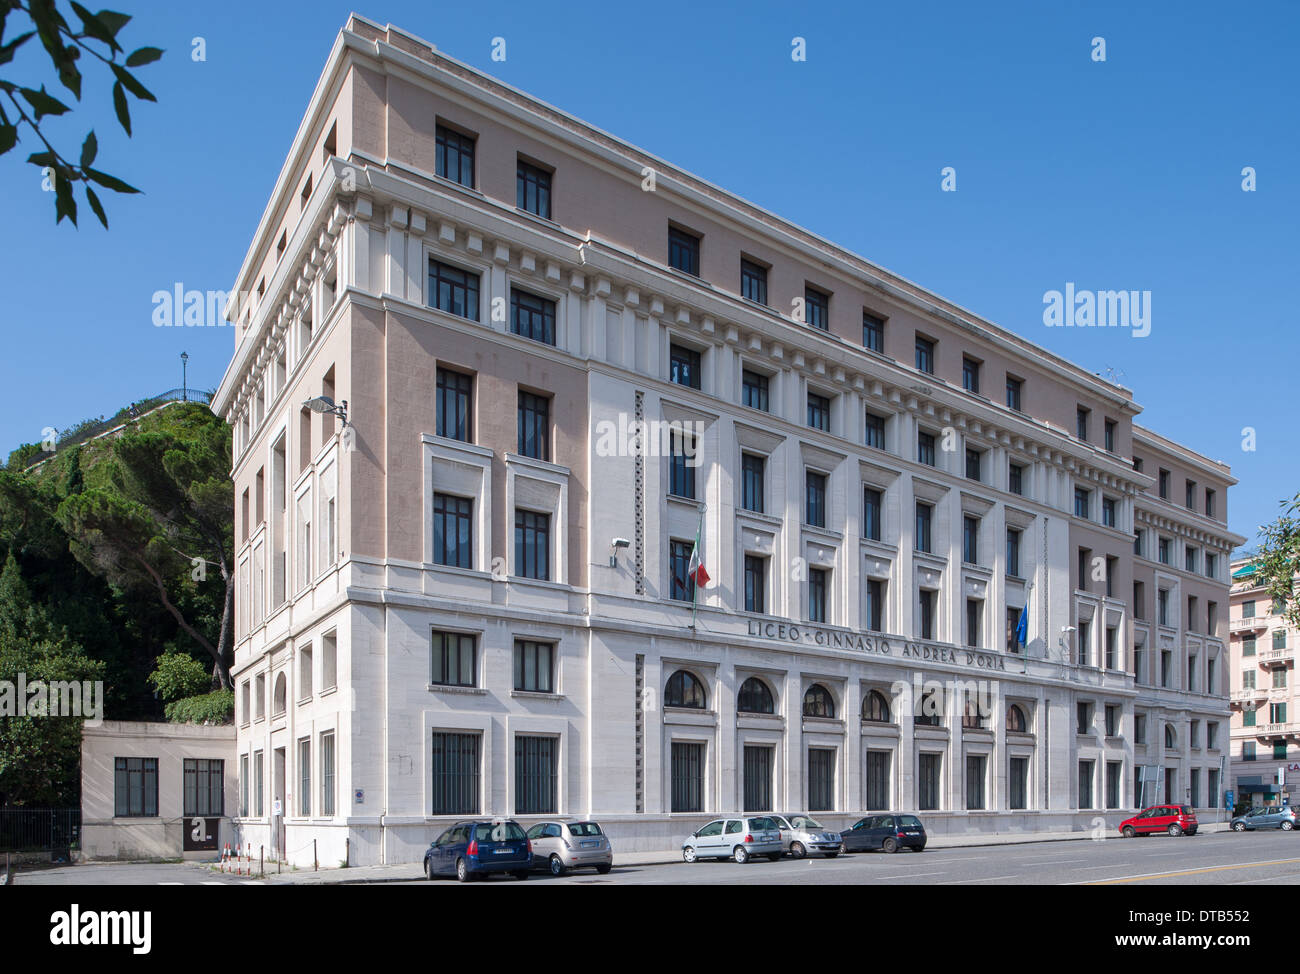 Genoa, Italy, the Liceo ginnasio Andrea D' Oria Stock Photo